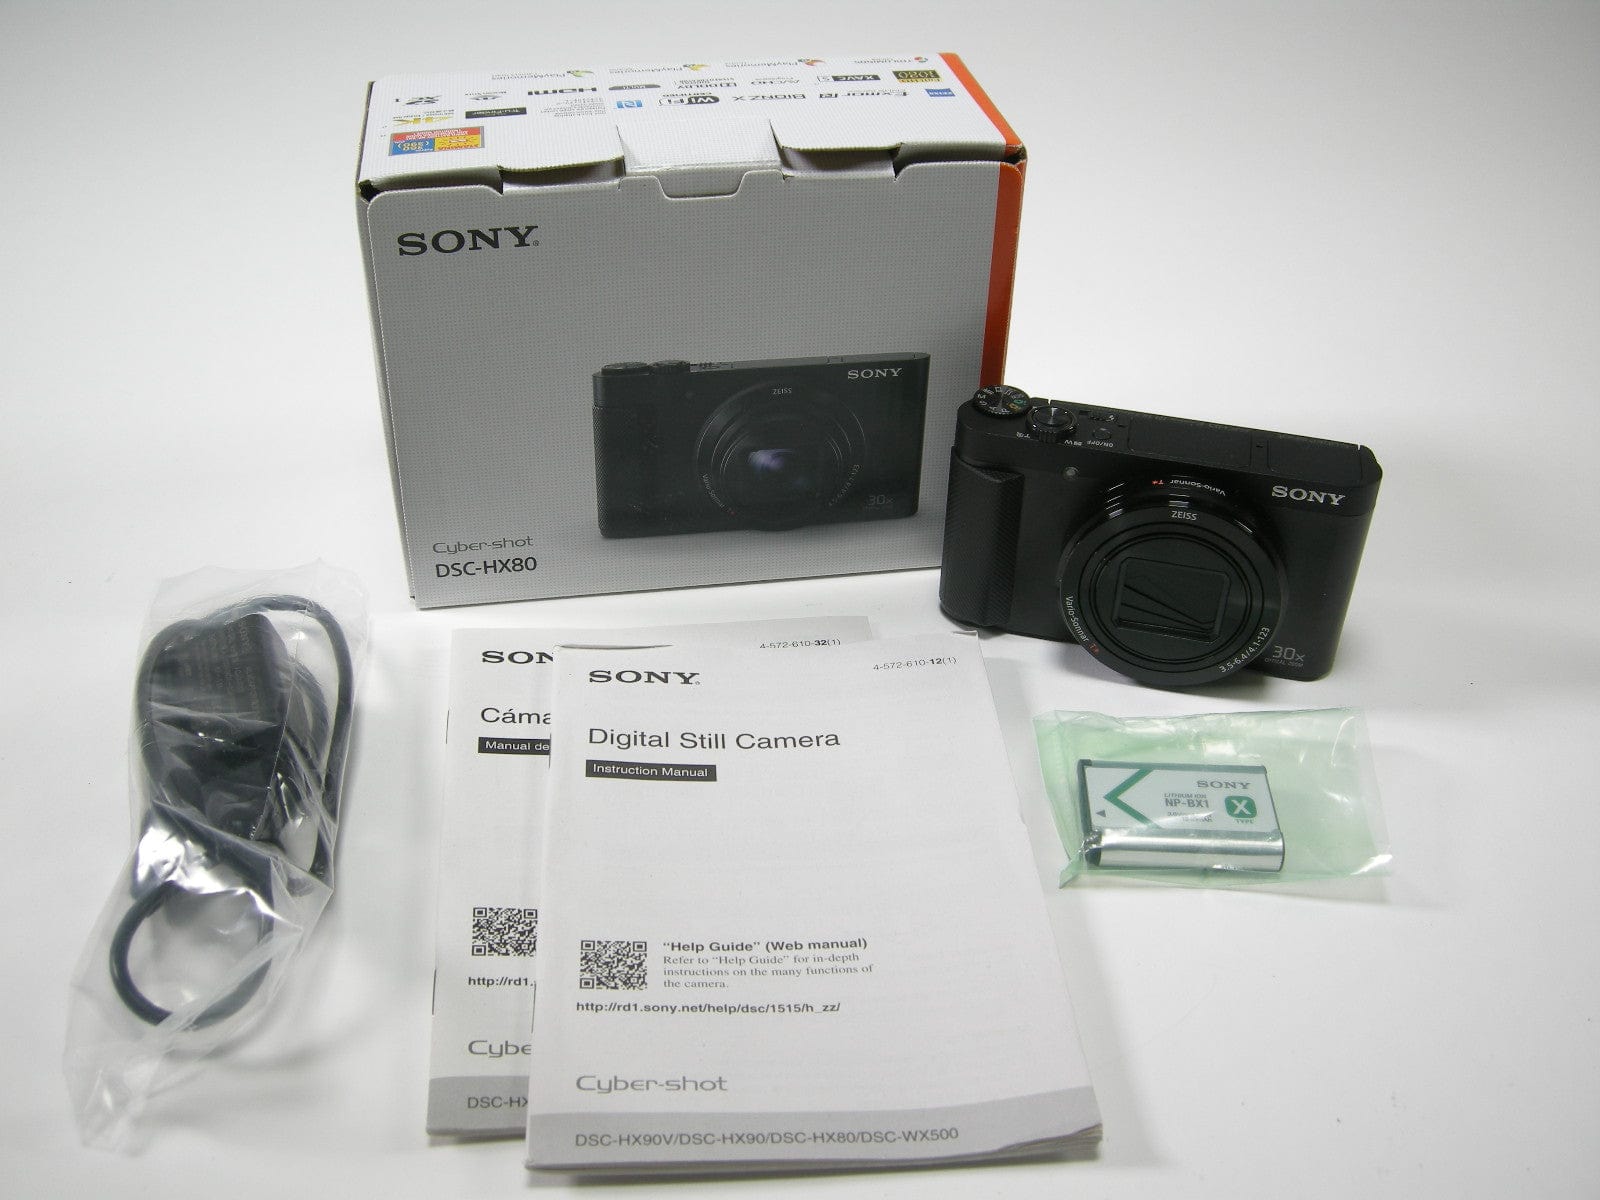 Sony Cyber-shot DSC-HX80 18.2 MP Digital Camera - Black for sale online